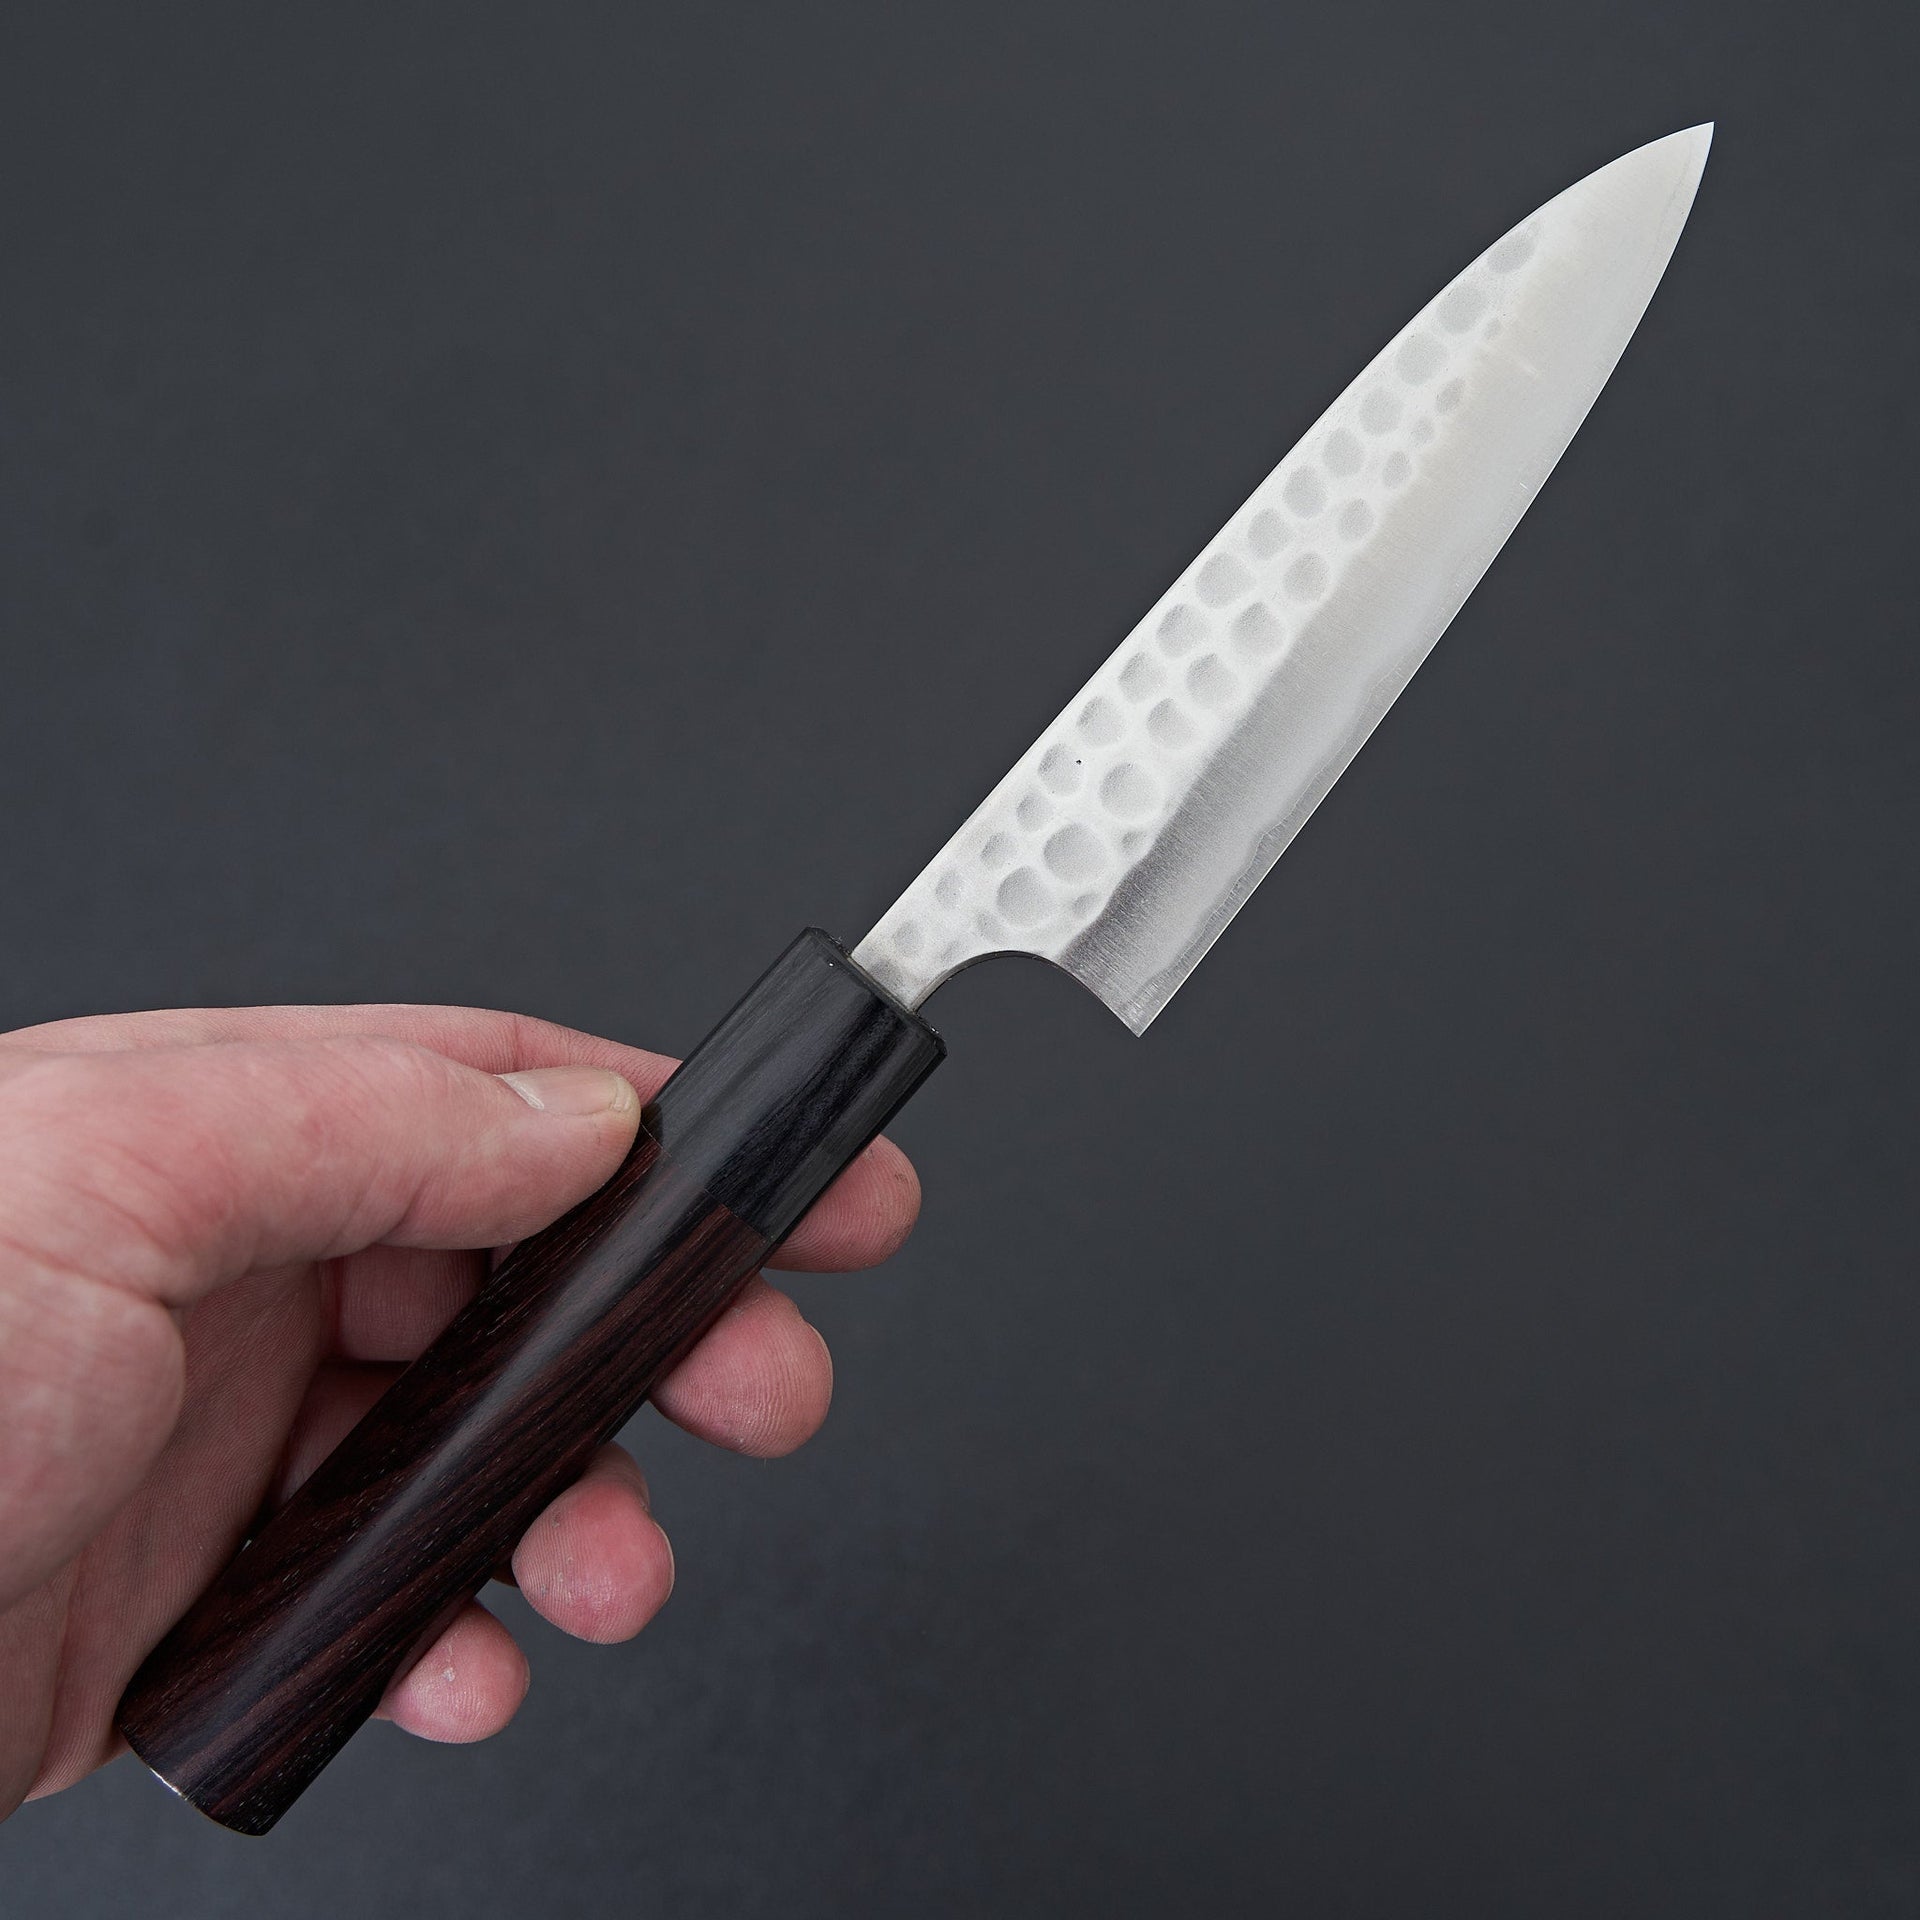 Katsushige Anryu Tsuchime Petty 120mm-Knife-Katsushige Anryu-Carbon Knife Co